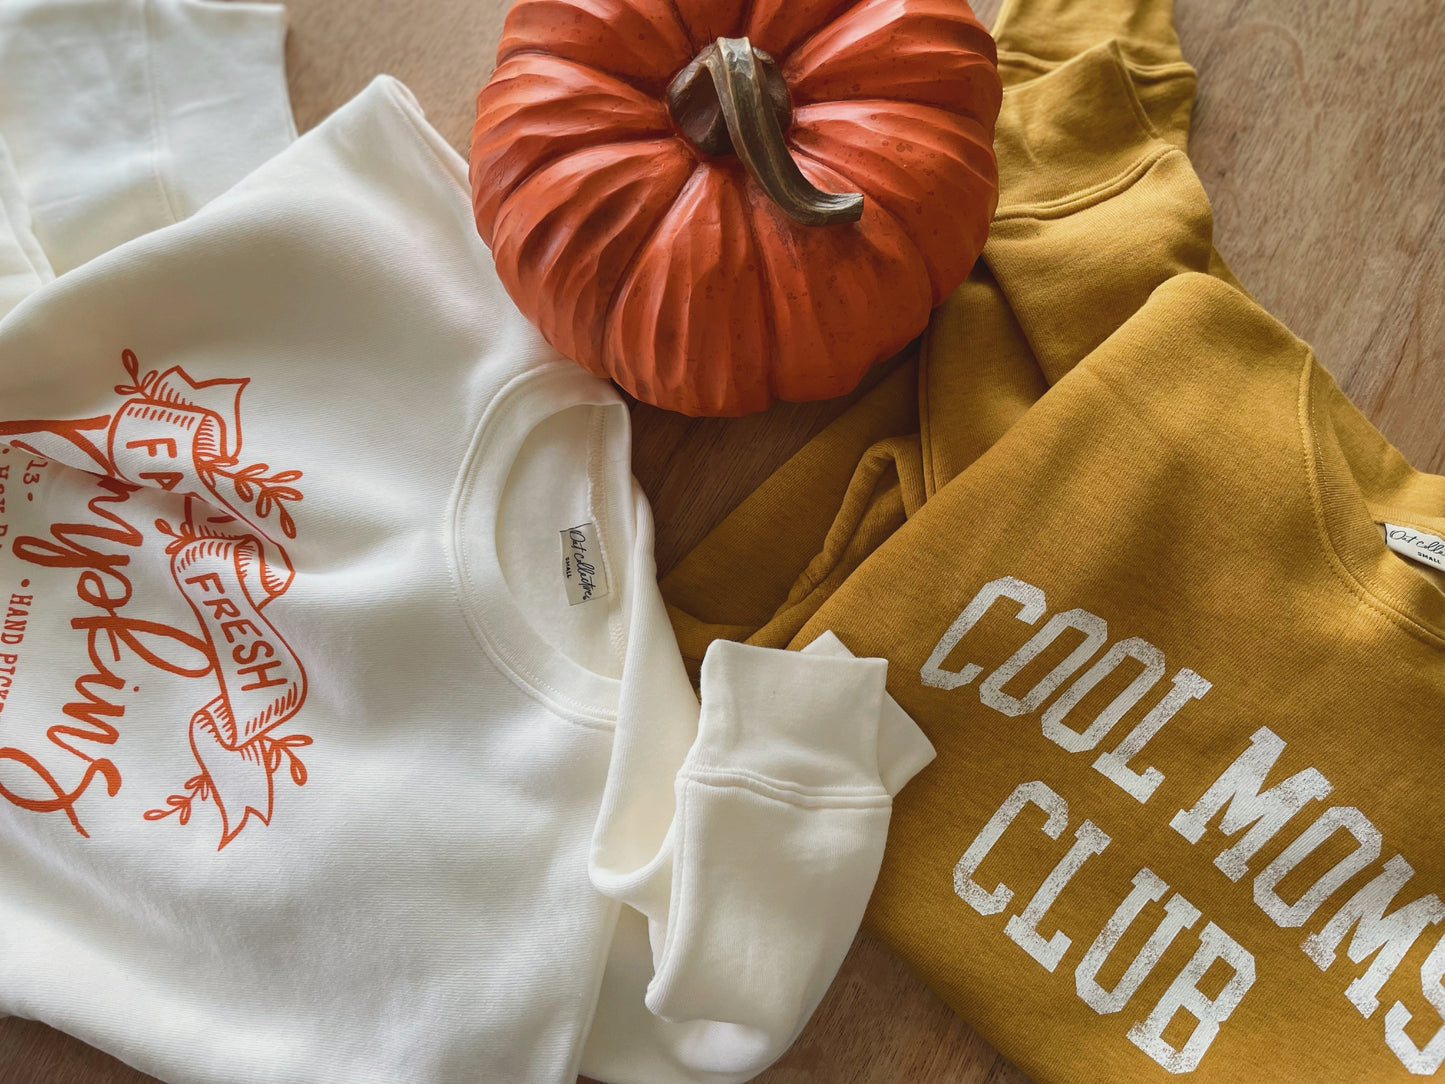 Cool Moms Club Softest Fleece Sweatshirt